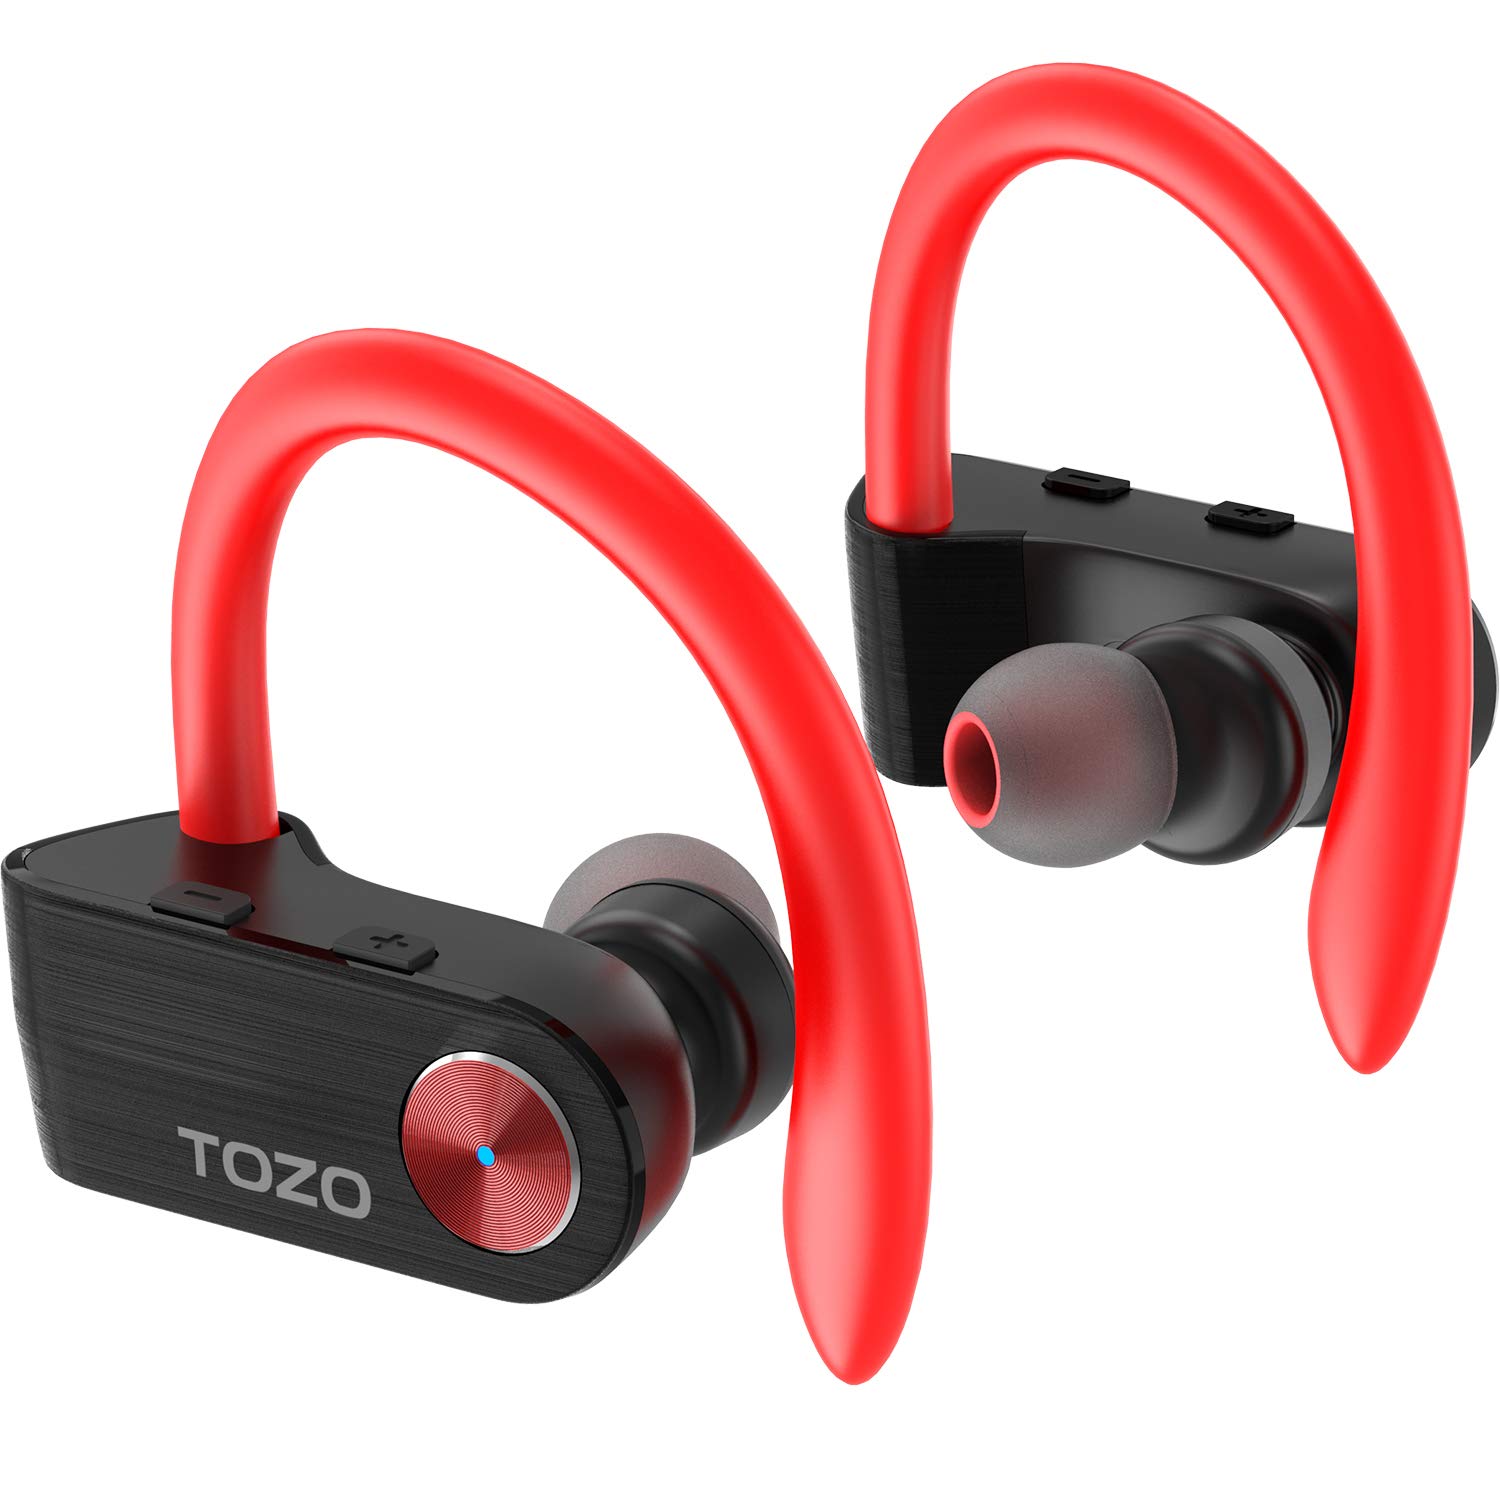 TOZO T5 True Wireless Earbuds Repair Manual